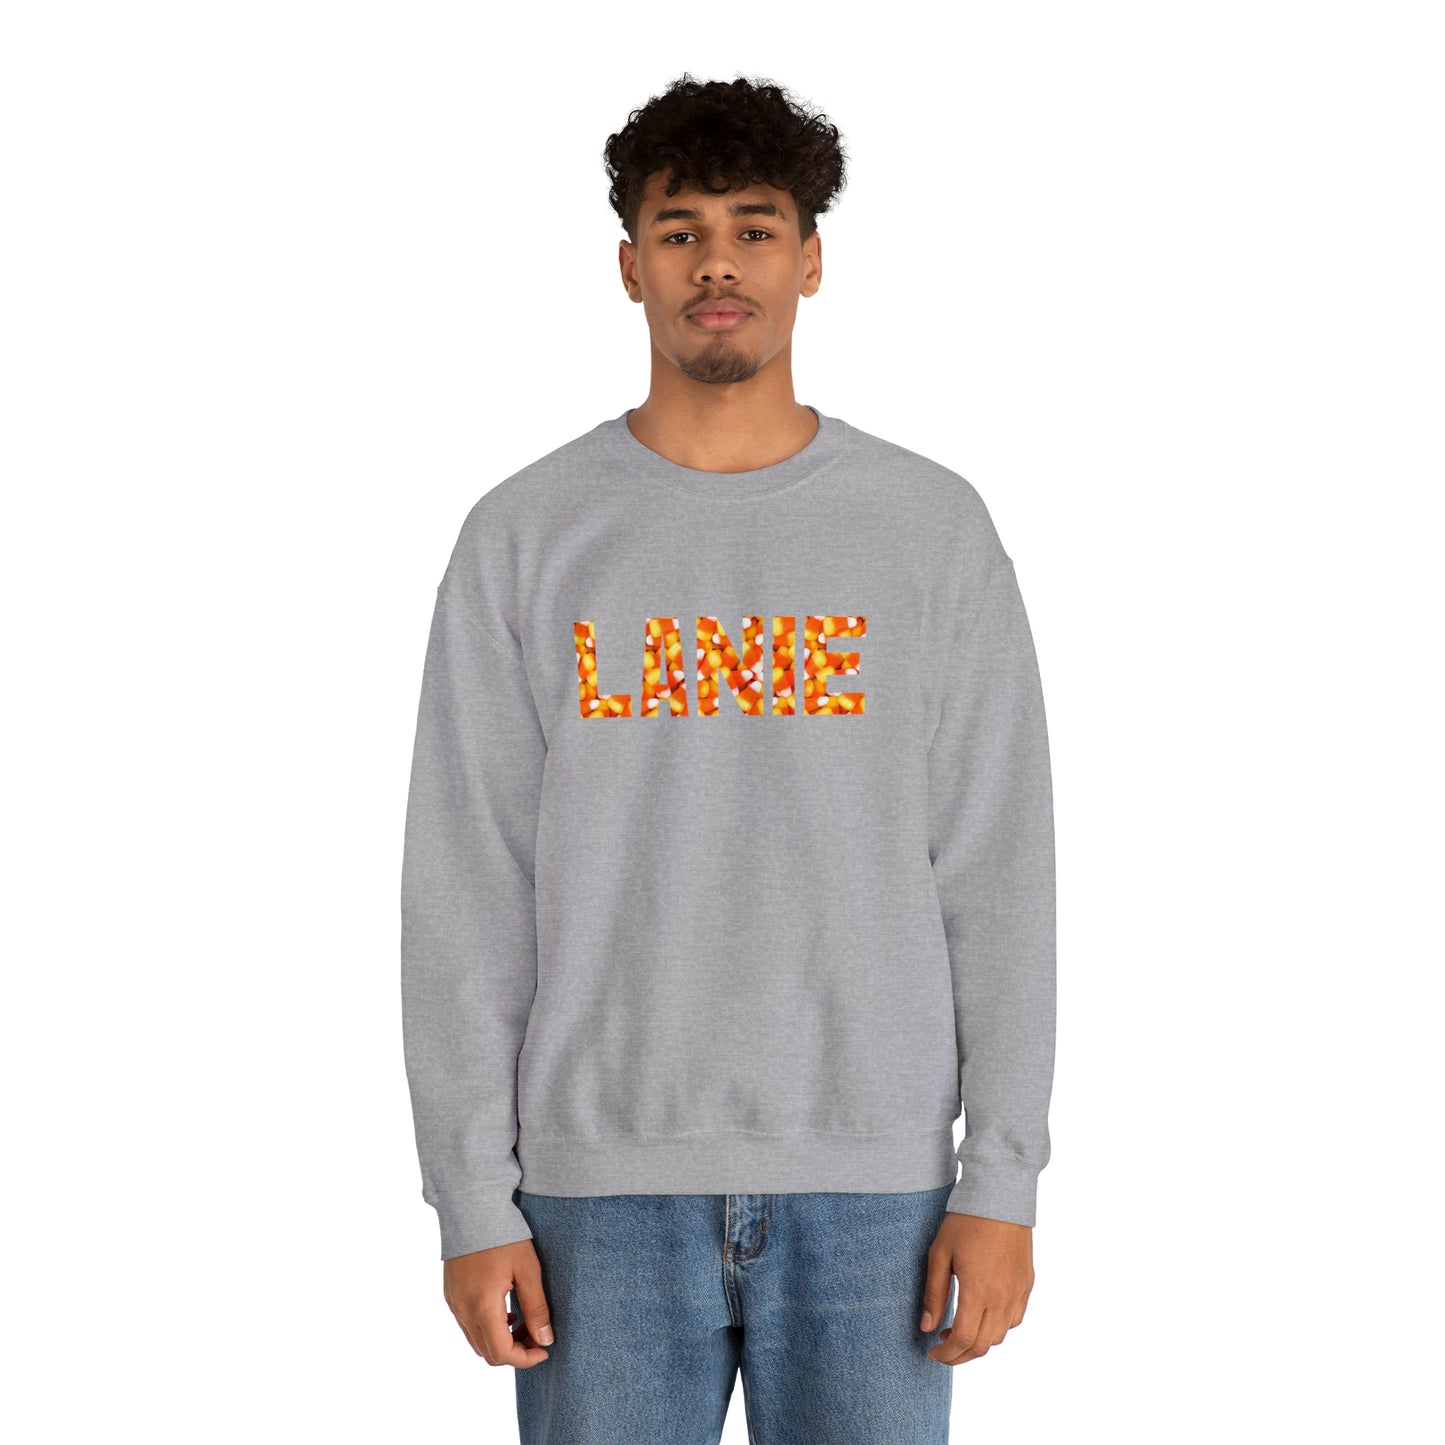 Candy Corn Personalized Unisex Sweatshirt